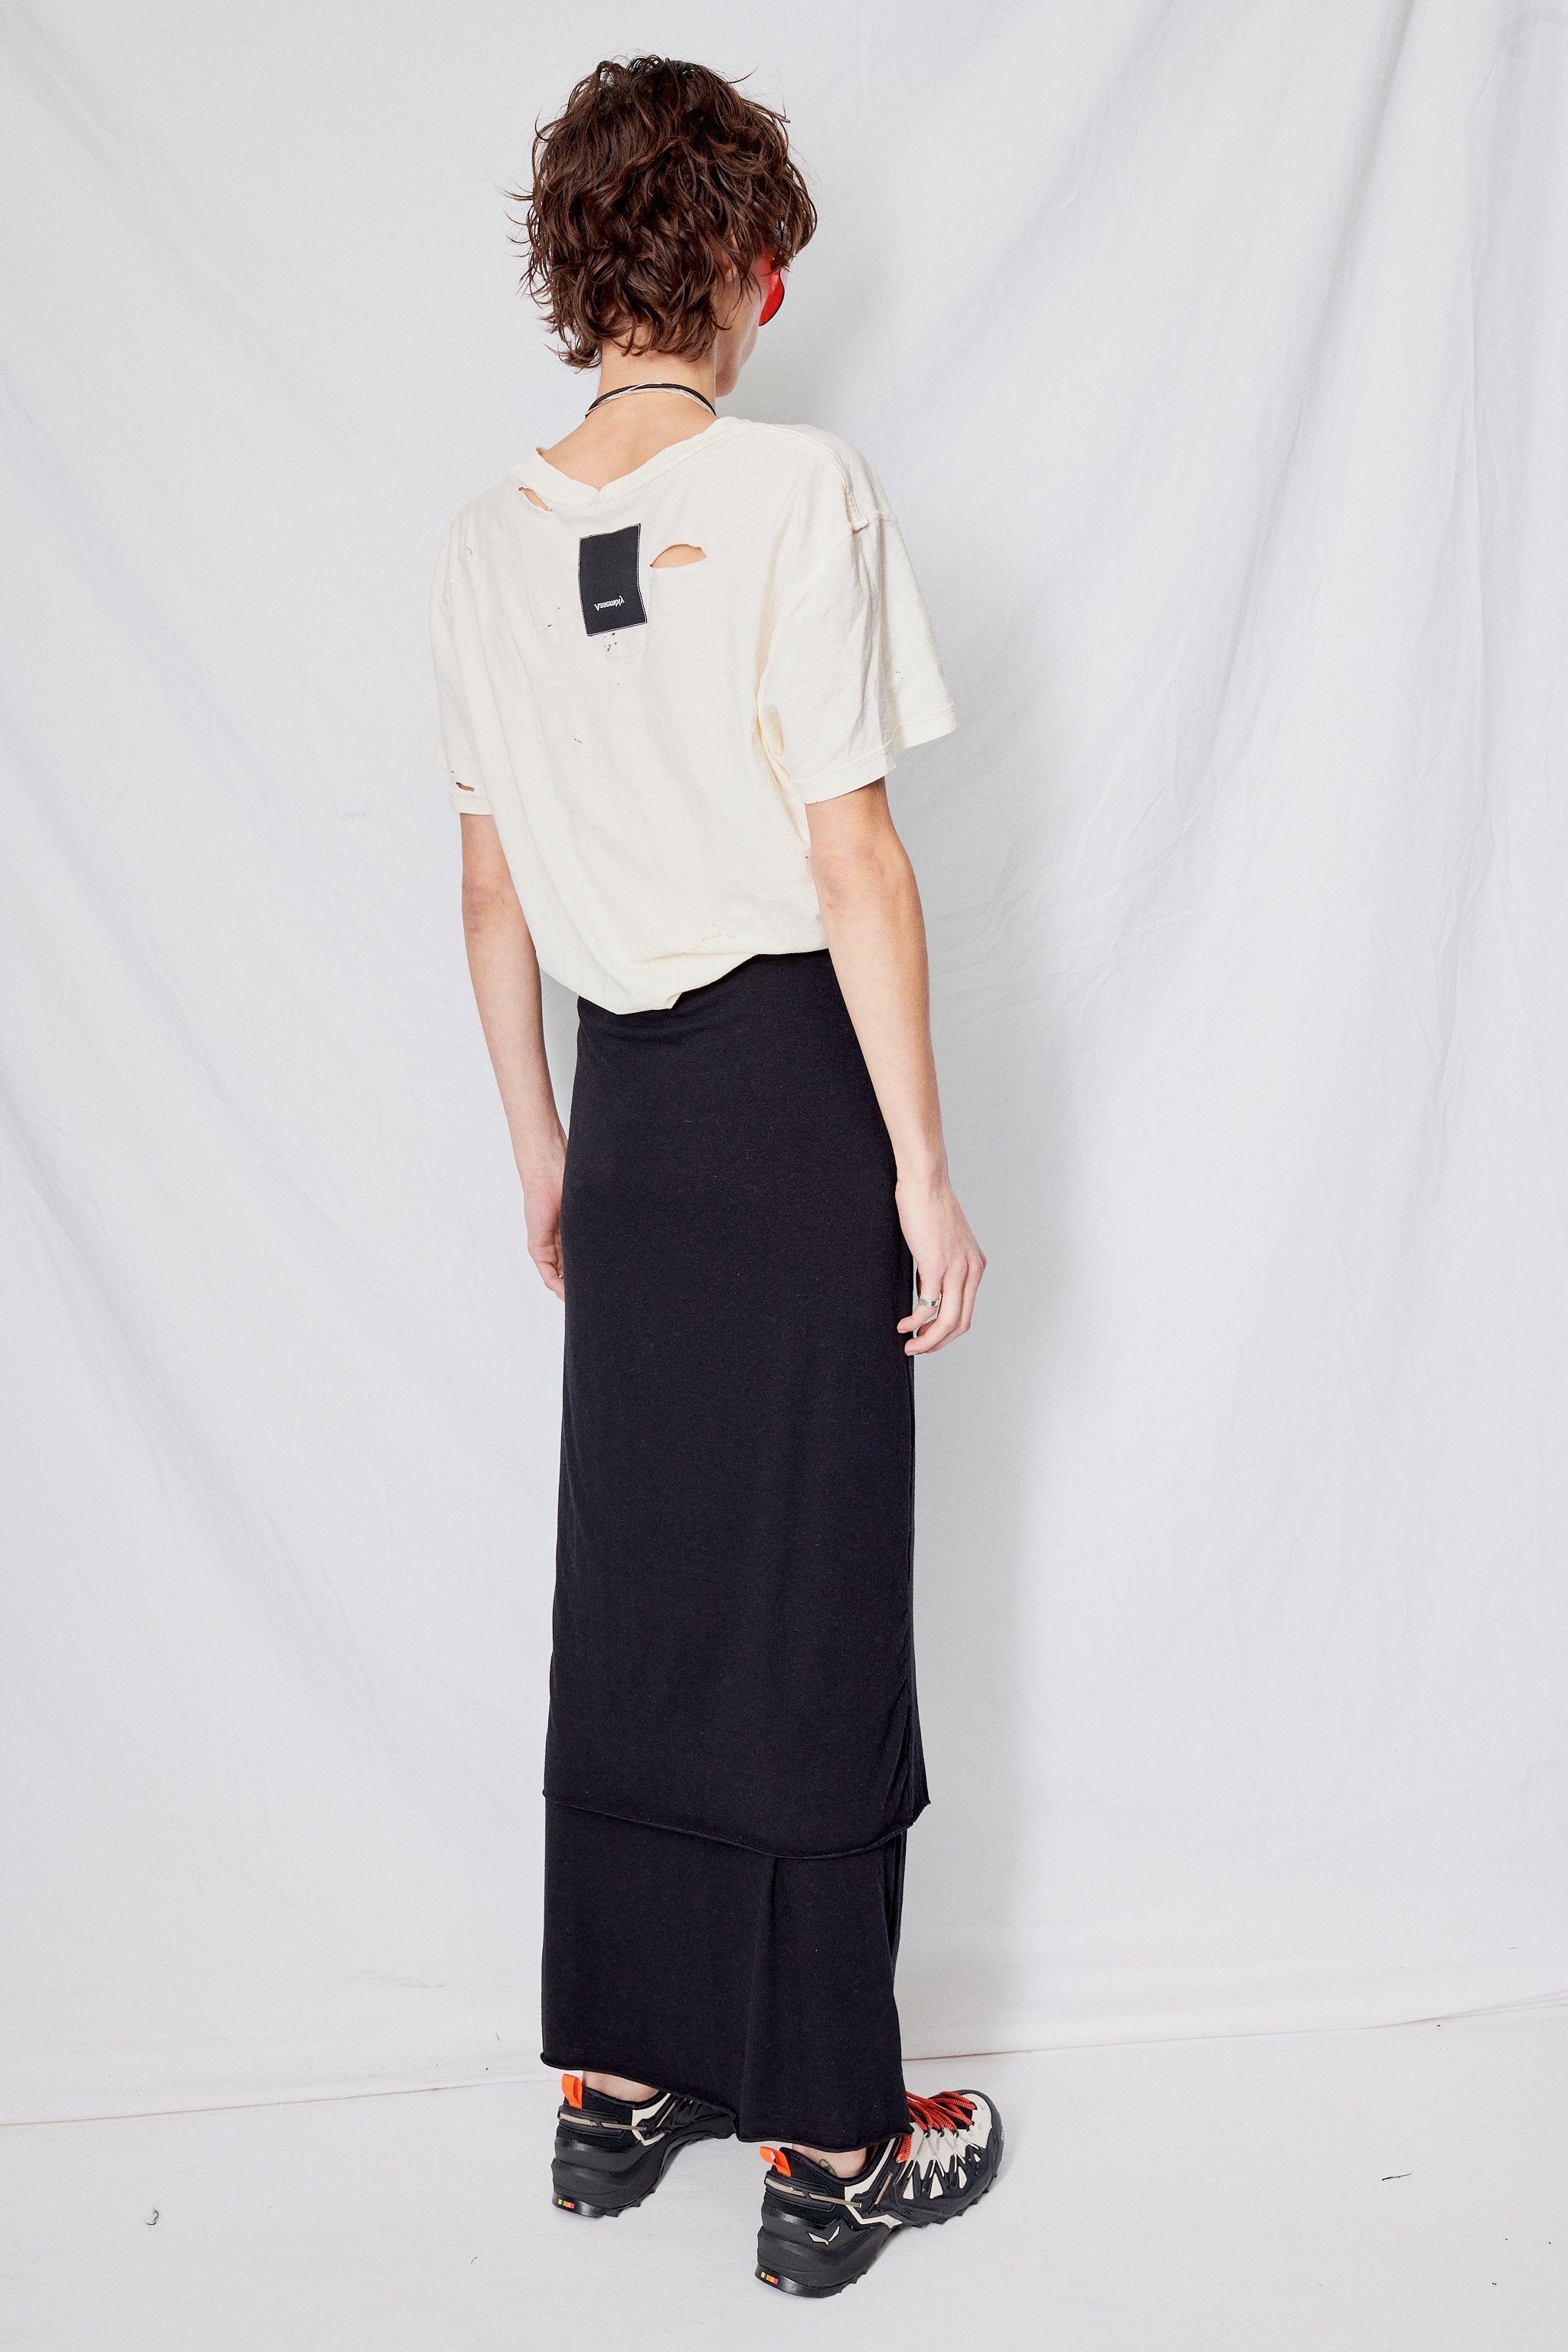 Black Modal Jersey Maxi Skirt